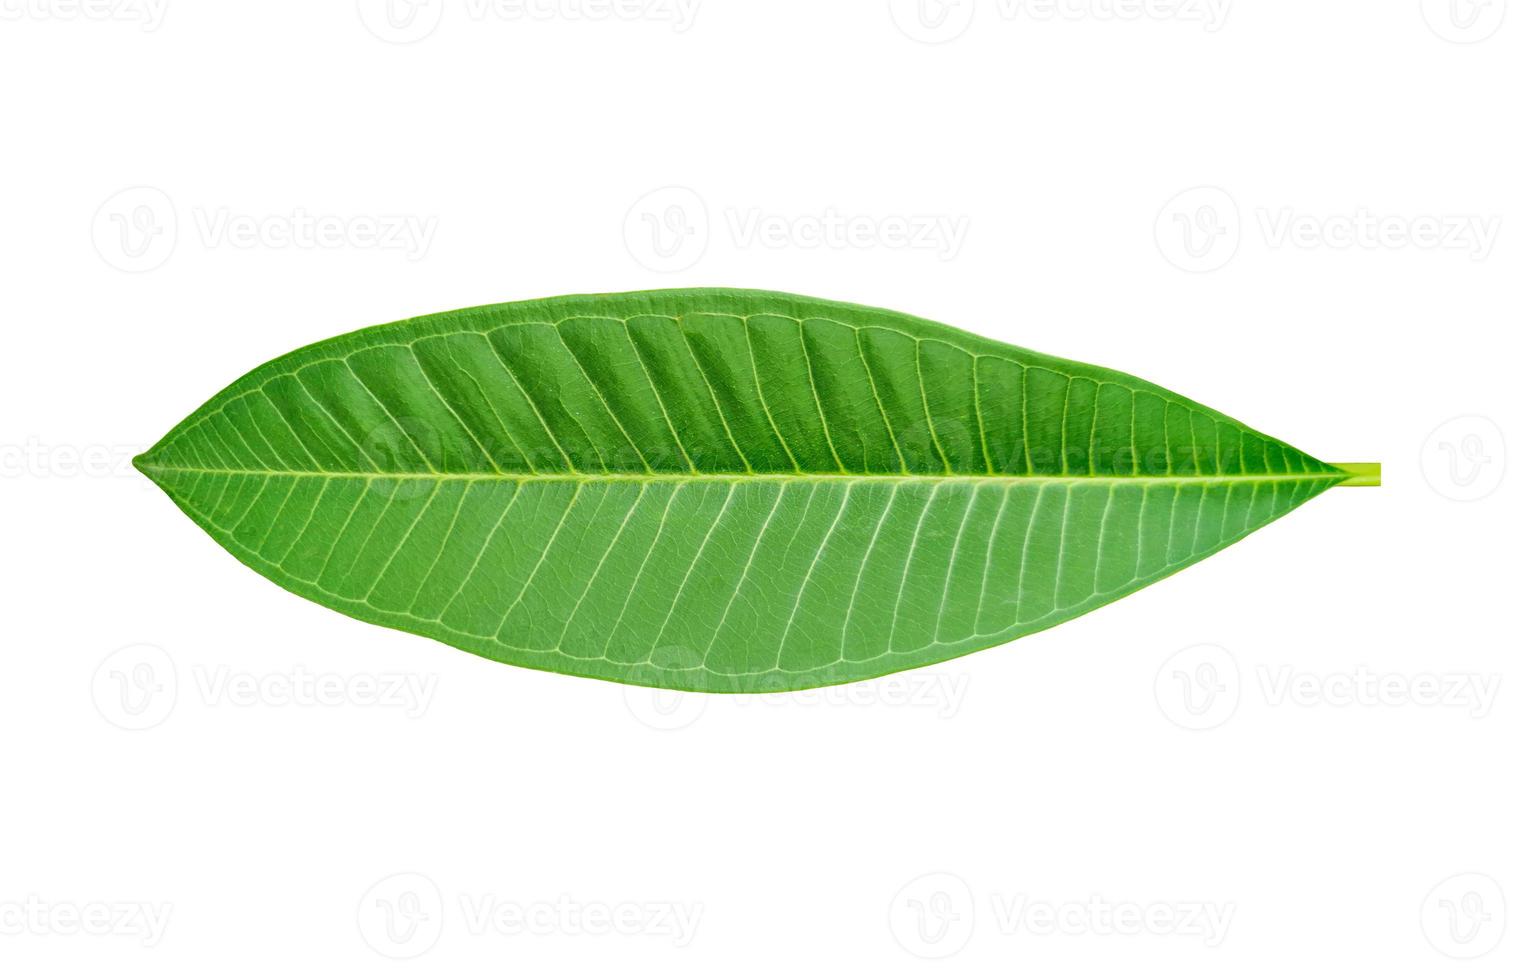 cerrar una hoja verde fresca de plumeria frangipani planta aislada sobre fondo blanco sin sombra foto